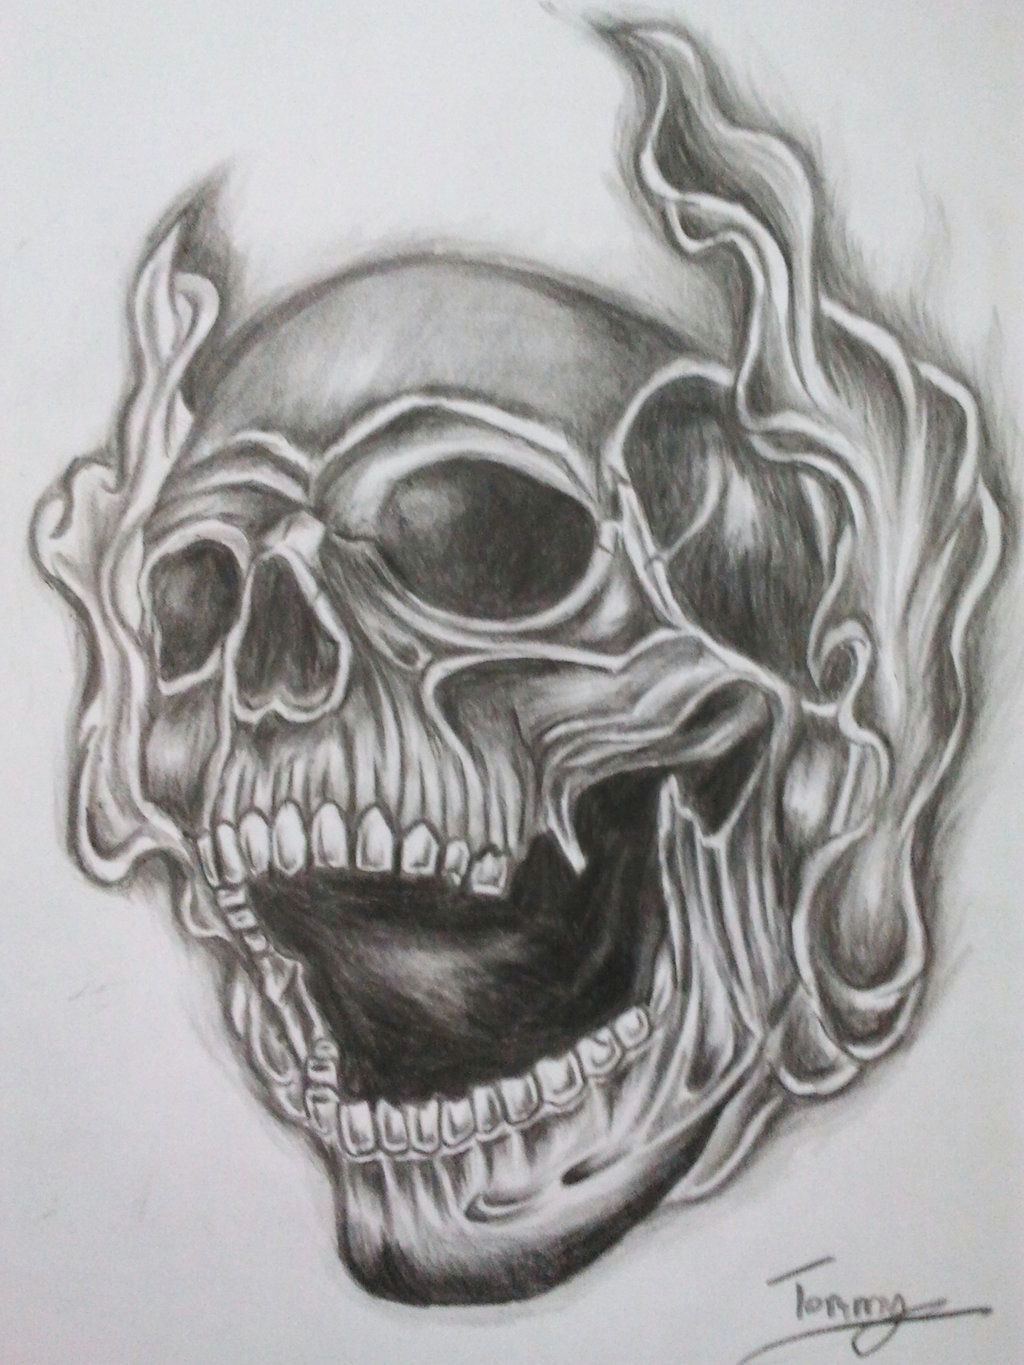 Skull Drawing Shading Skull and Cross Tattoo Designs Smoke Skull Tattoo by tommyyu